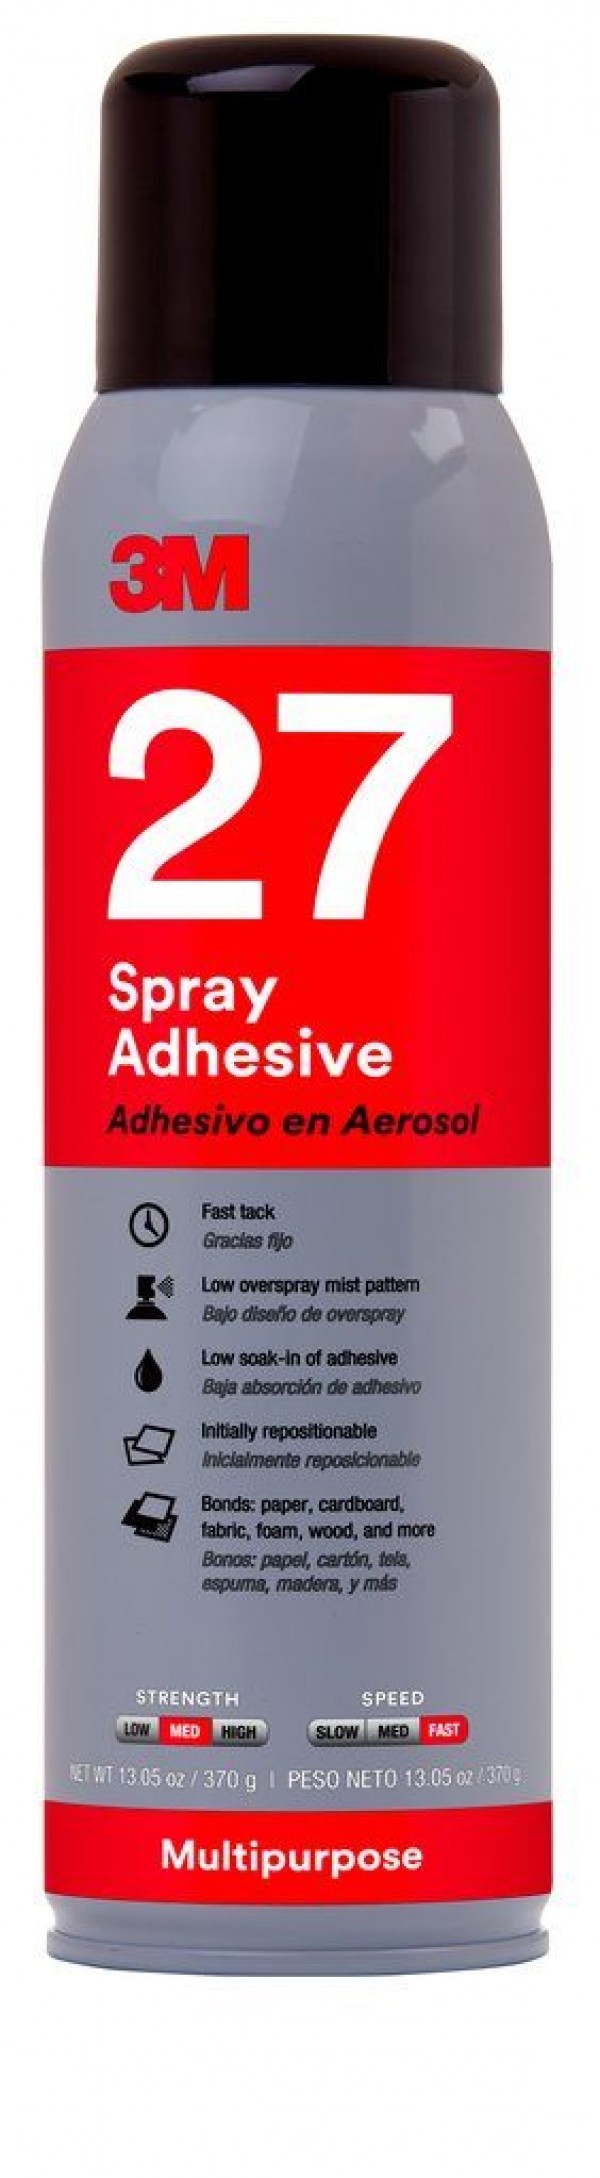 3M™ Multi-Purpose 27 Spray Adhesive Clear, Net Wt 13.05 oz, 12 cans per case